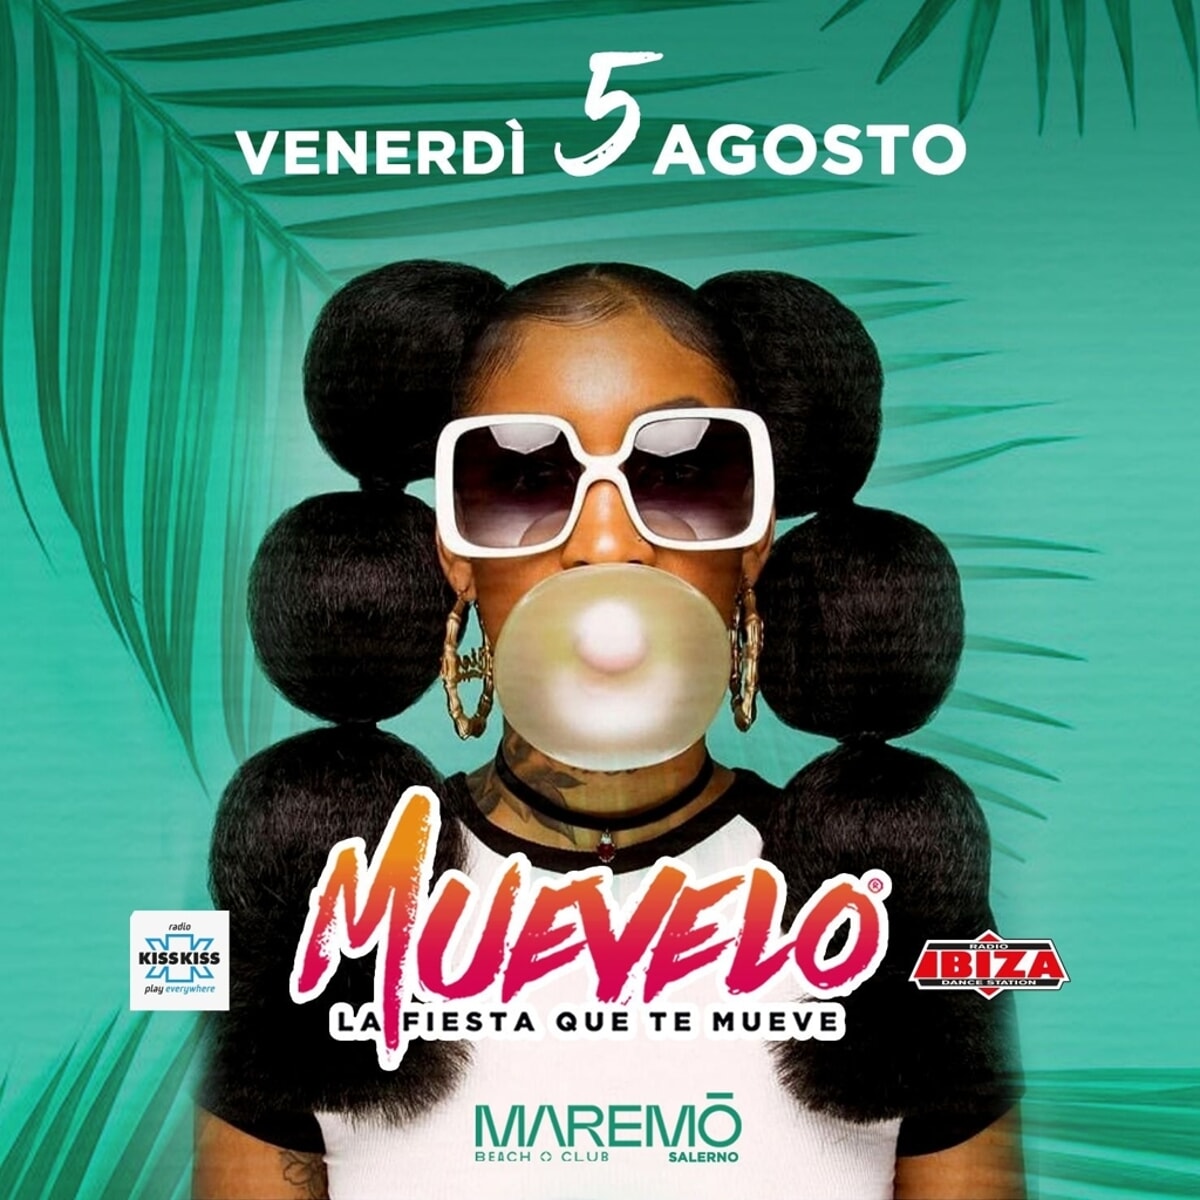 Venerdì 5 agosto “Muevelo la fiesta que te mueve” al Maremò Beach club di Salerno